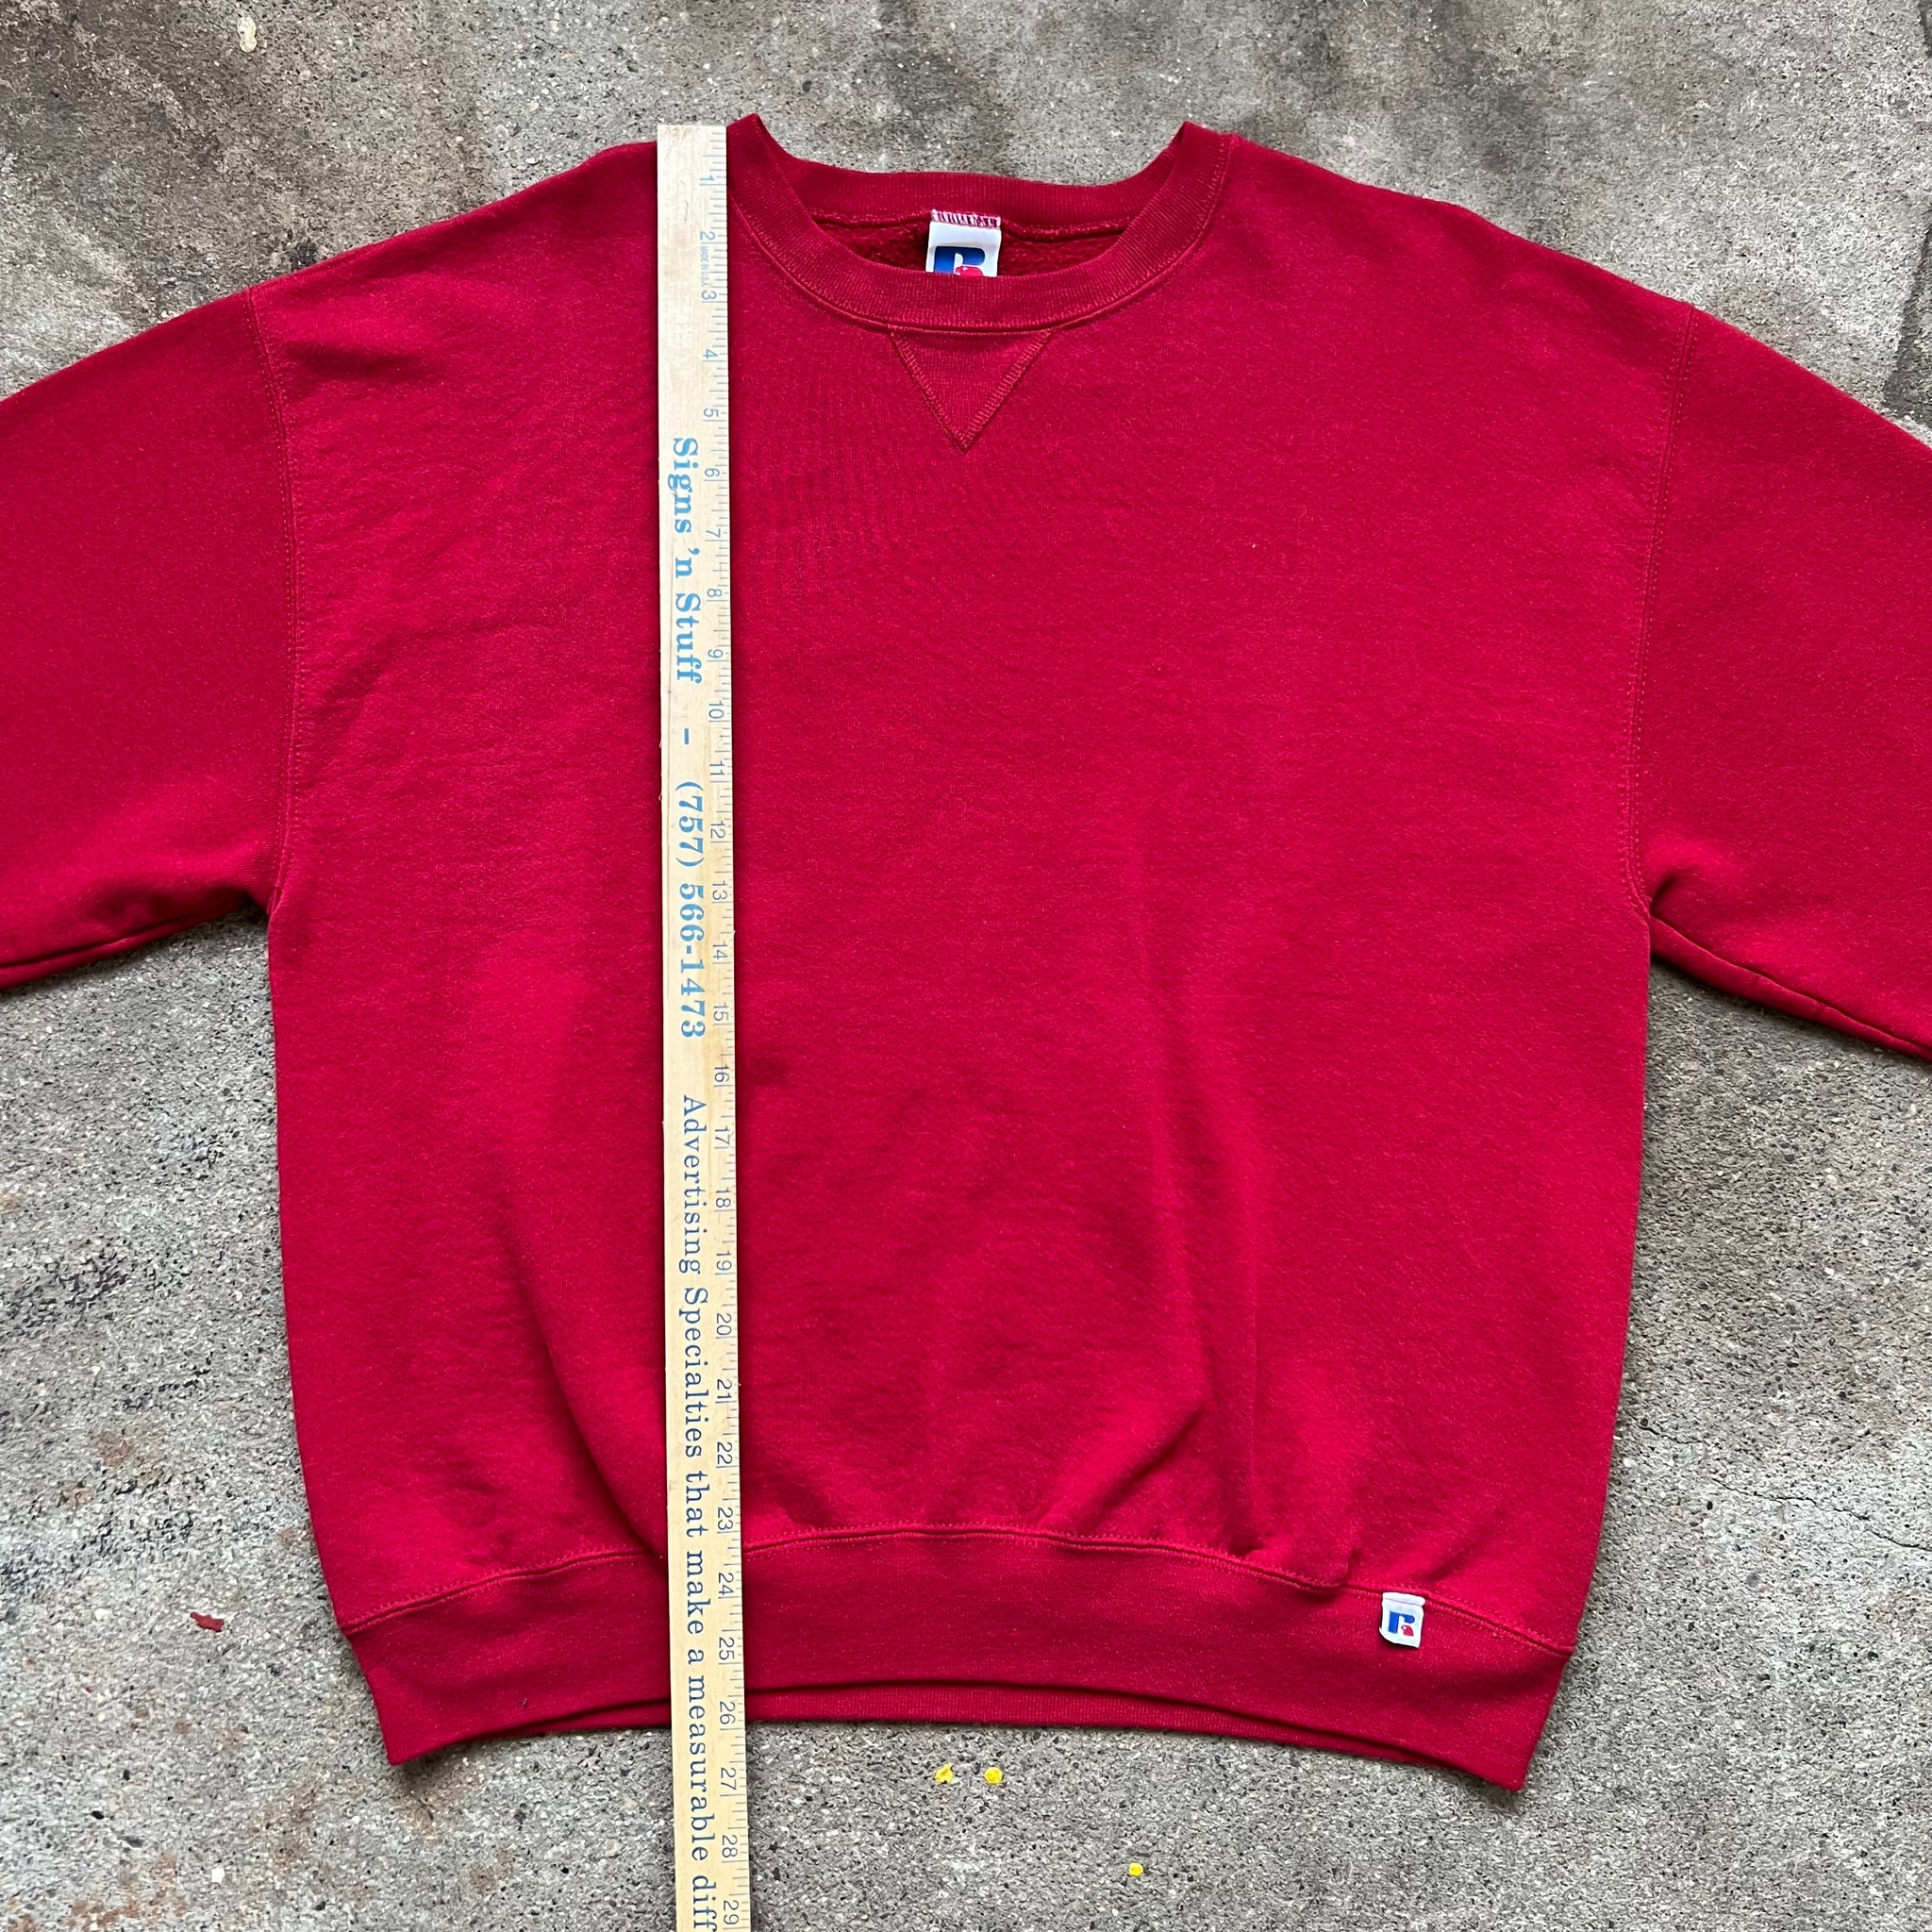 90s/Y2K Russell Red Sweatshirt Large